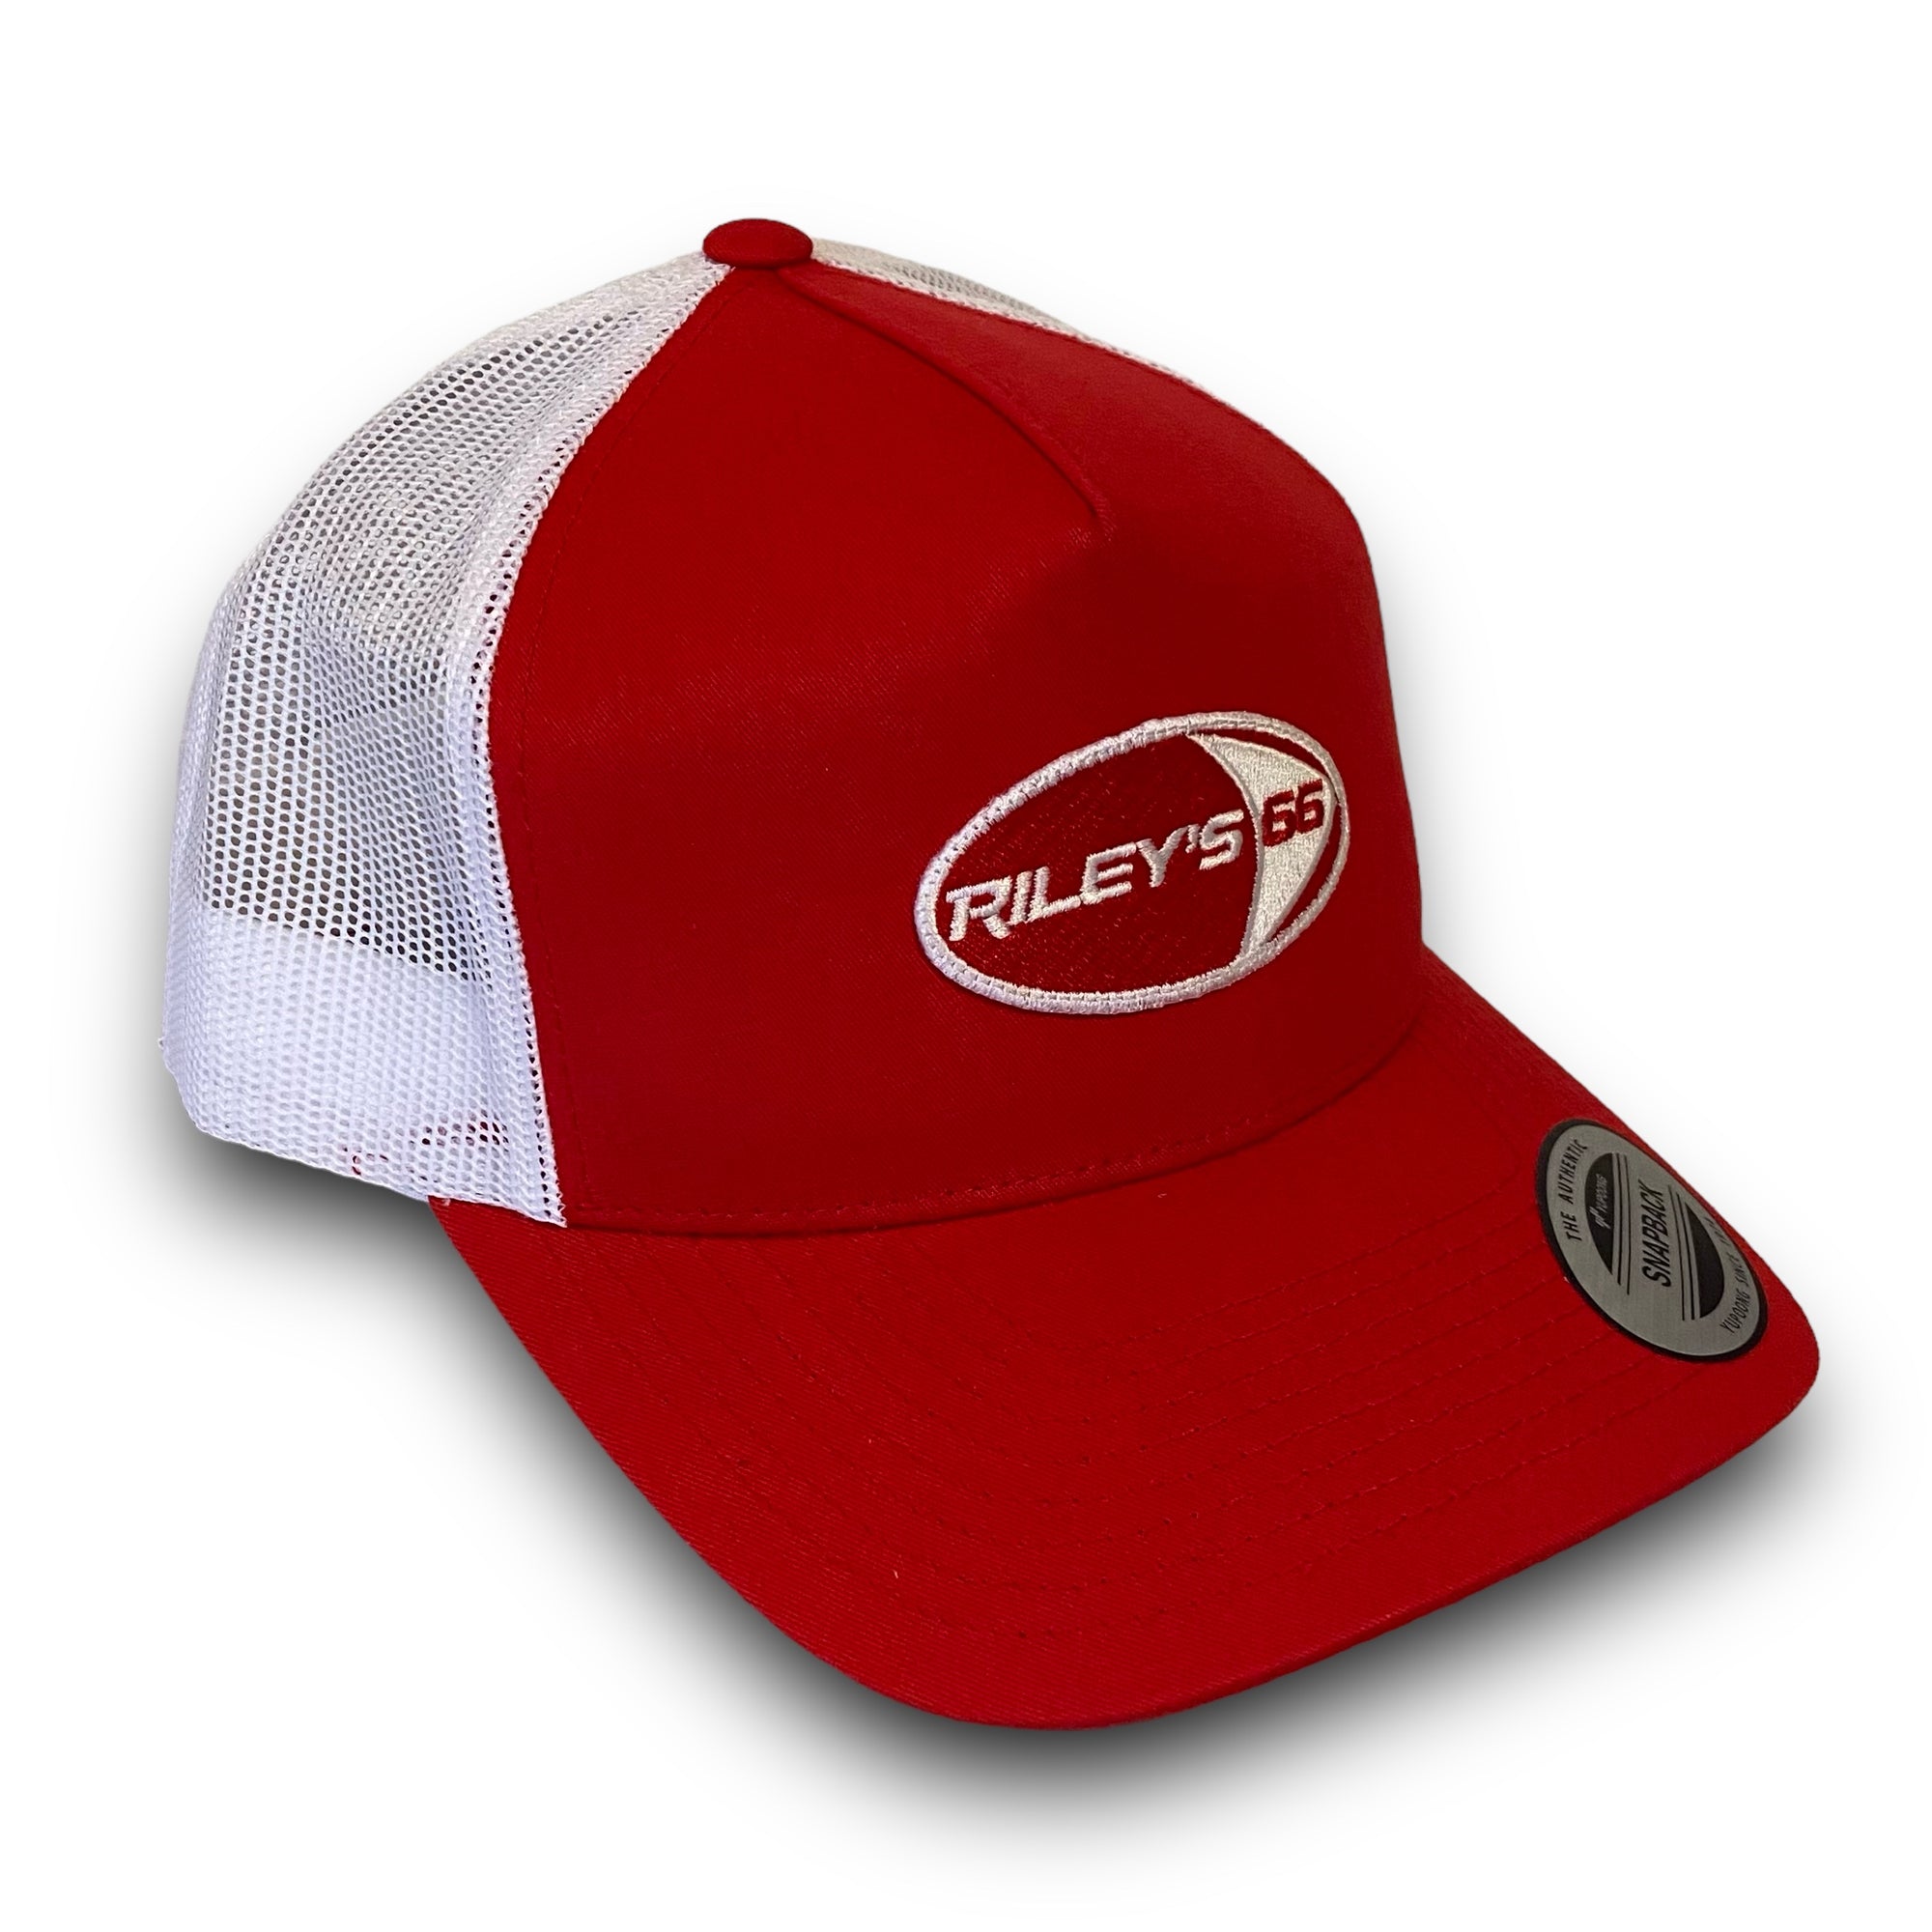 Riley's 66 Trucker Hat - Red & White